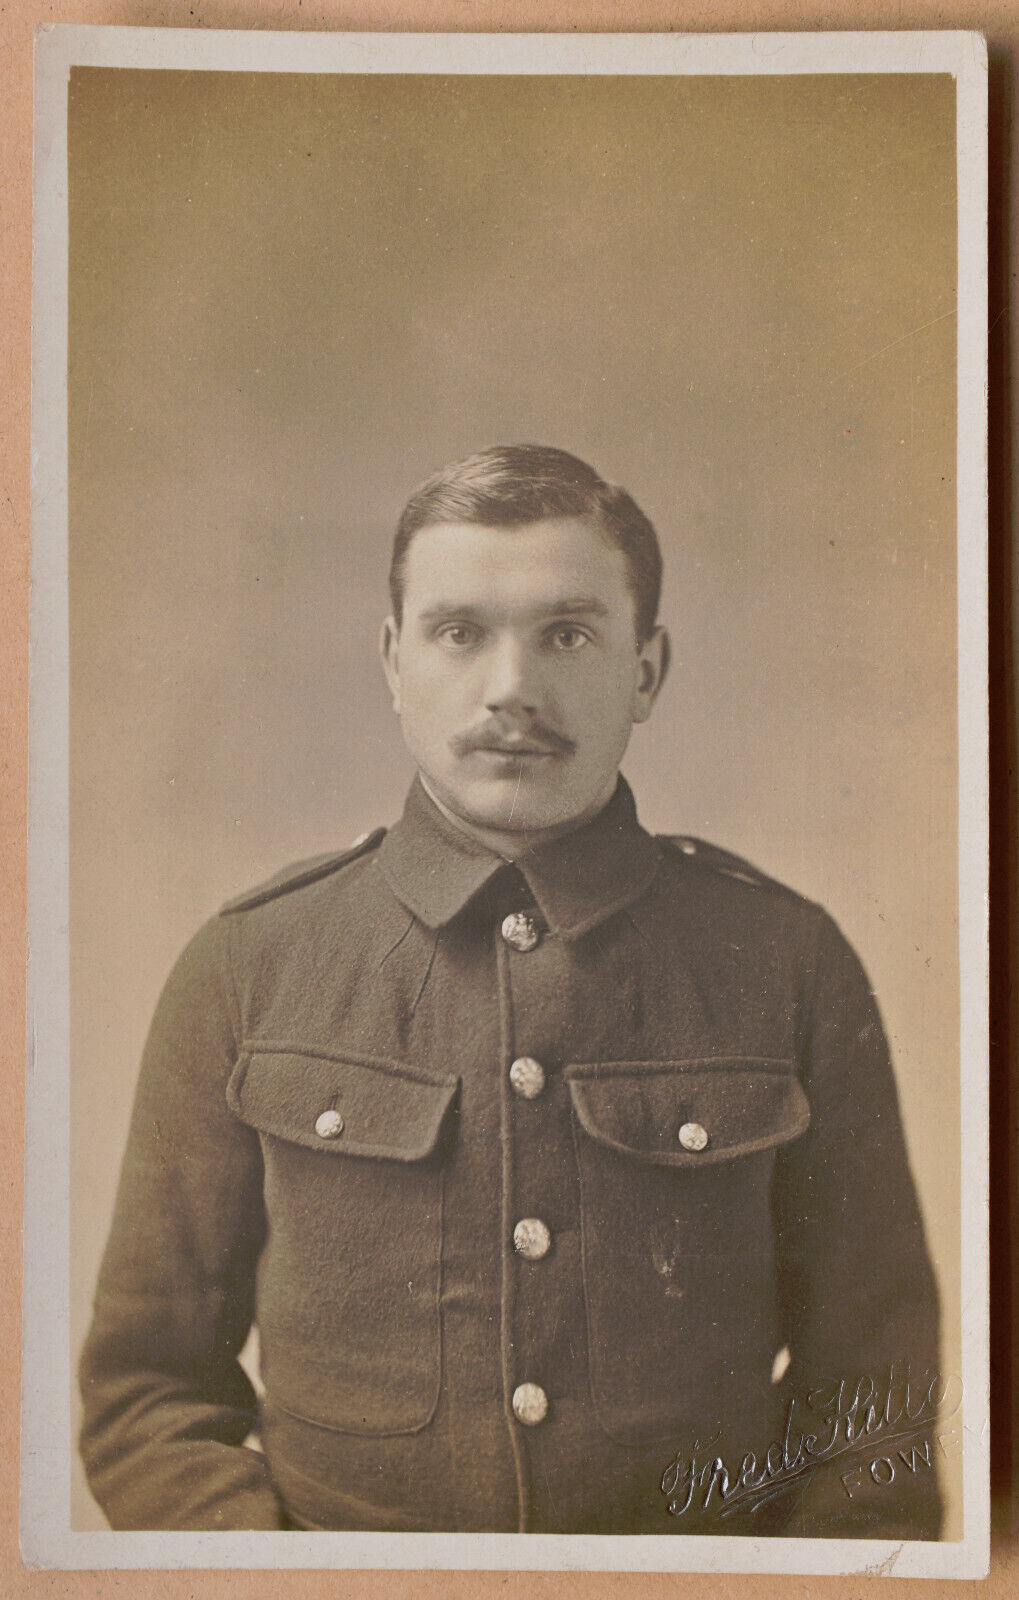 British army soldier portrait from Fowey Cornwall, WW1 or interwar era